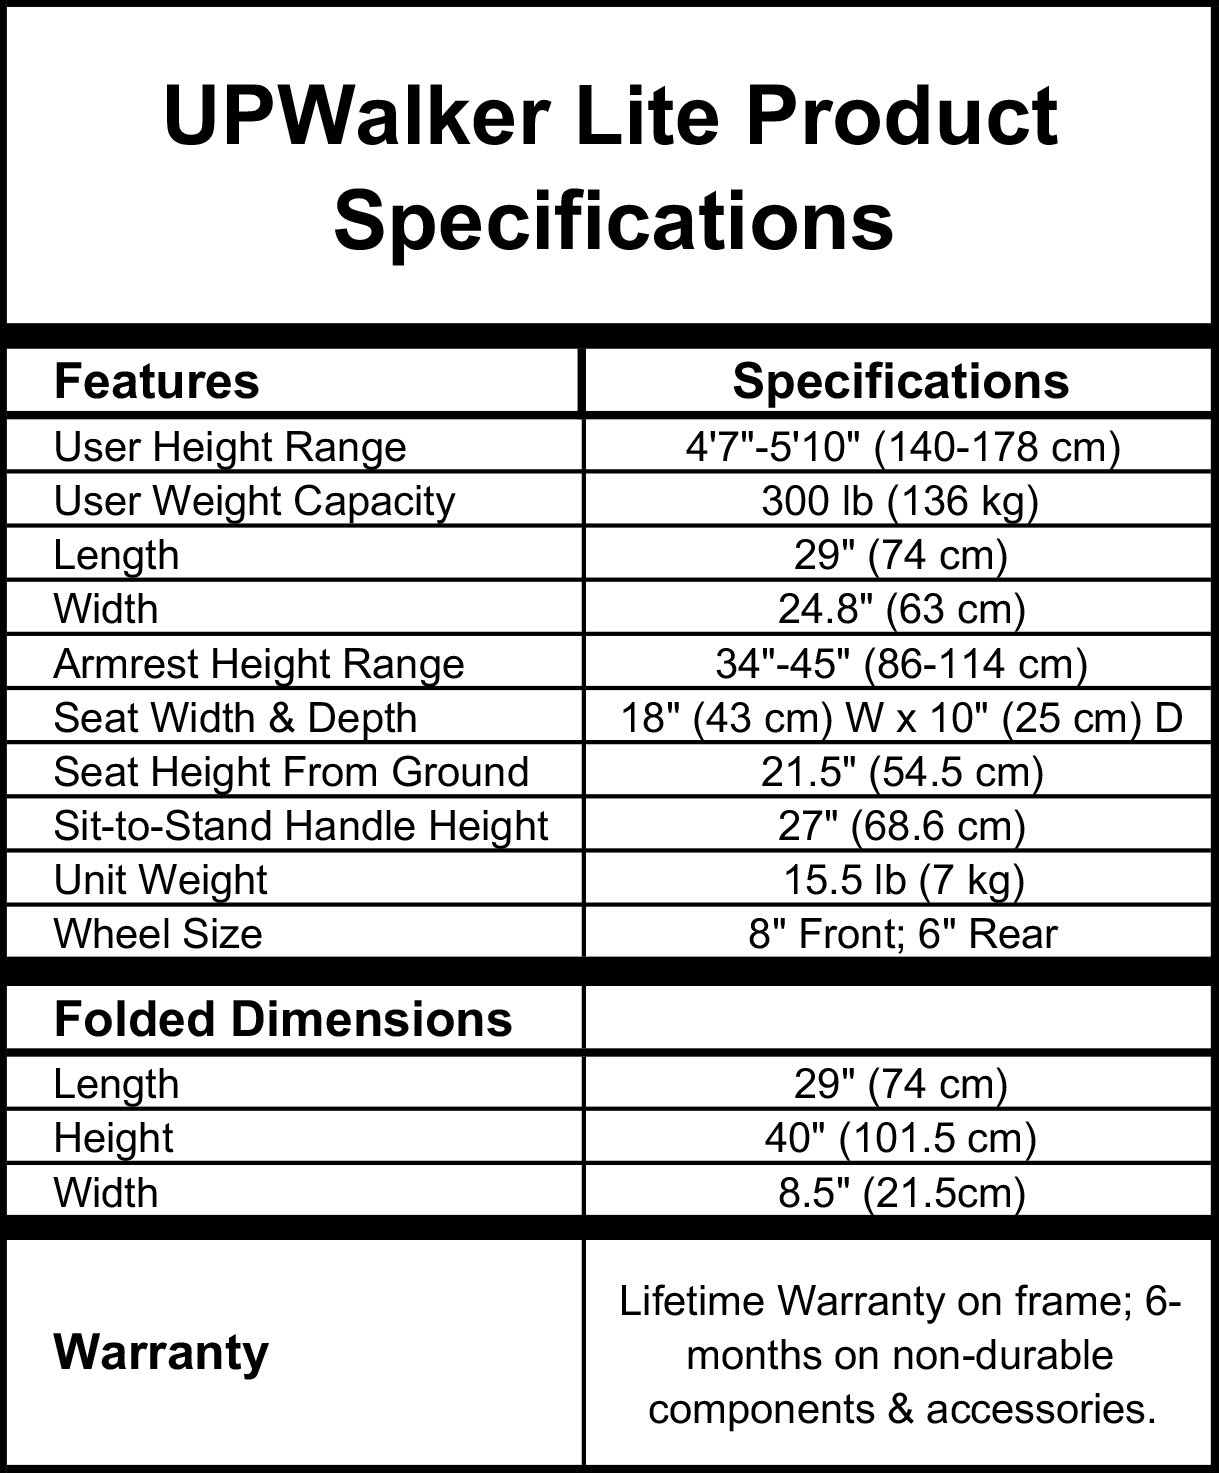 UPWalker Lite Product Specifications